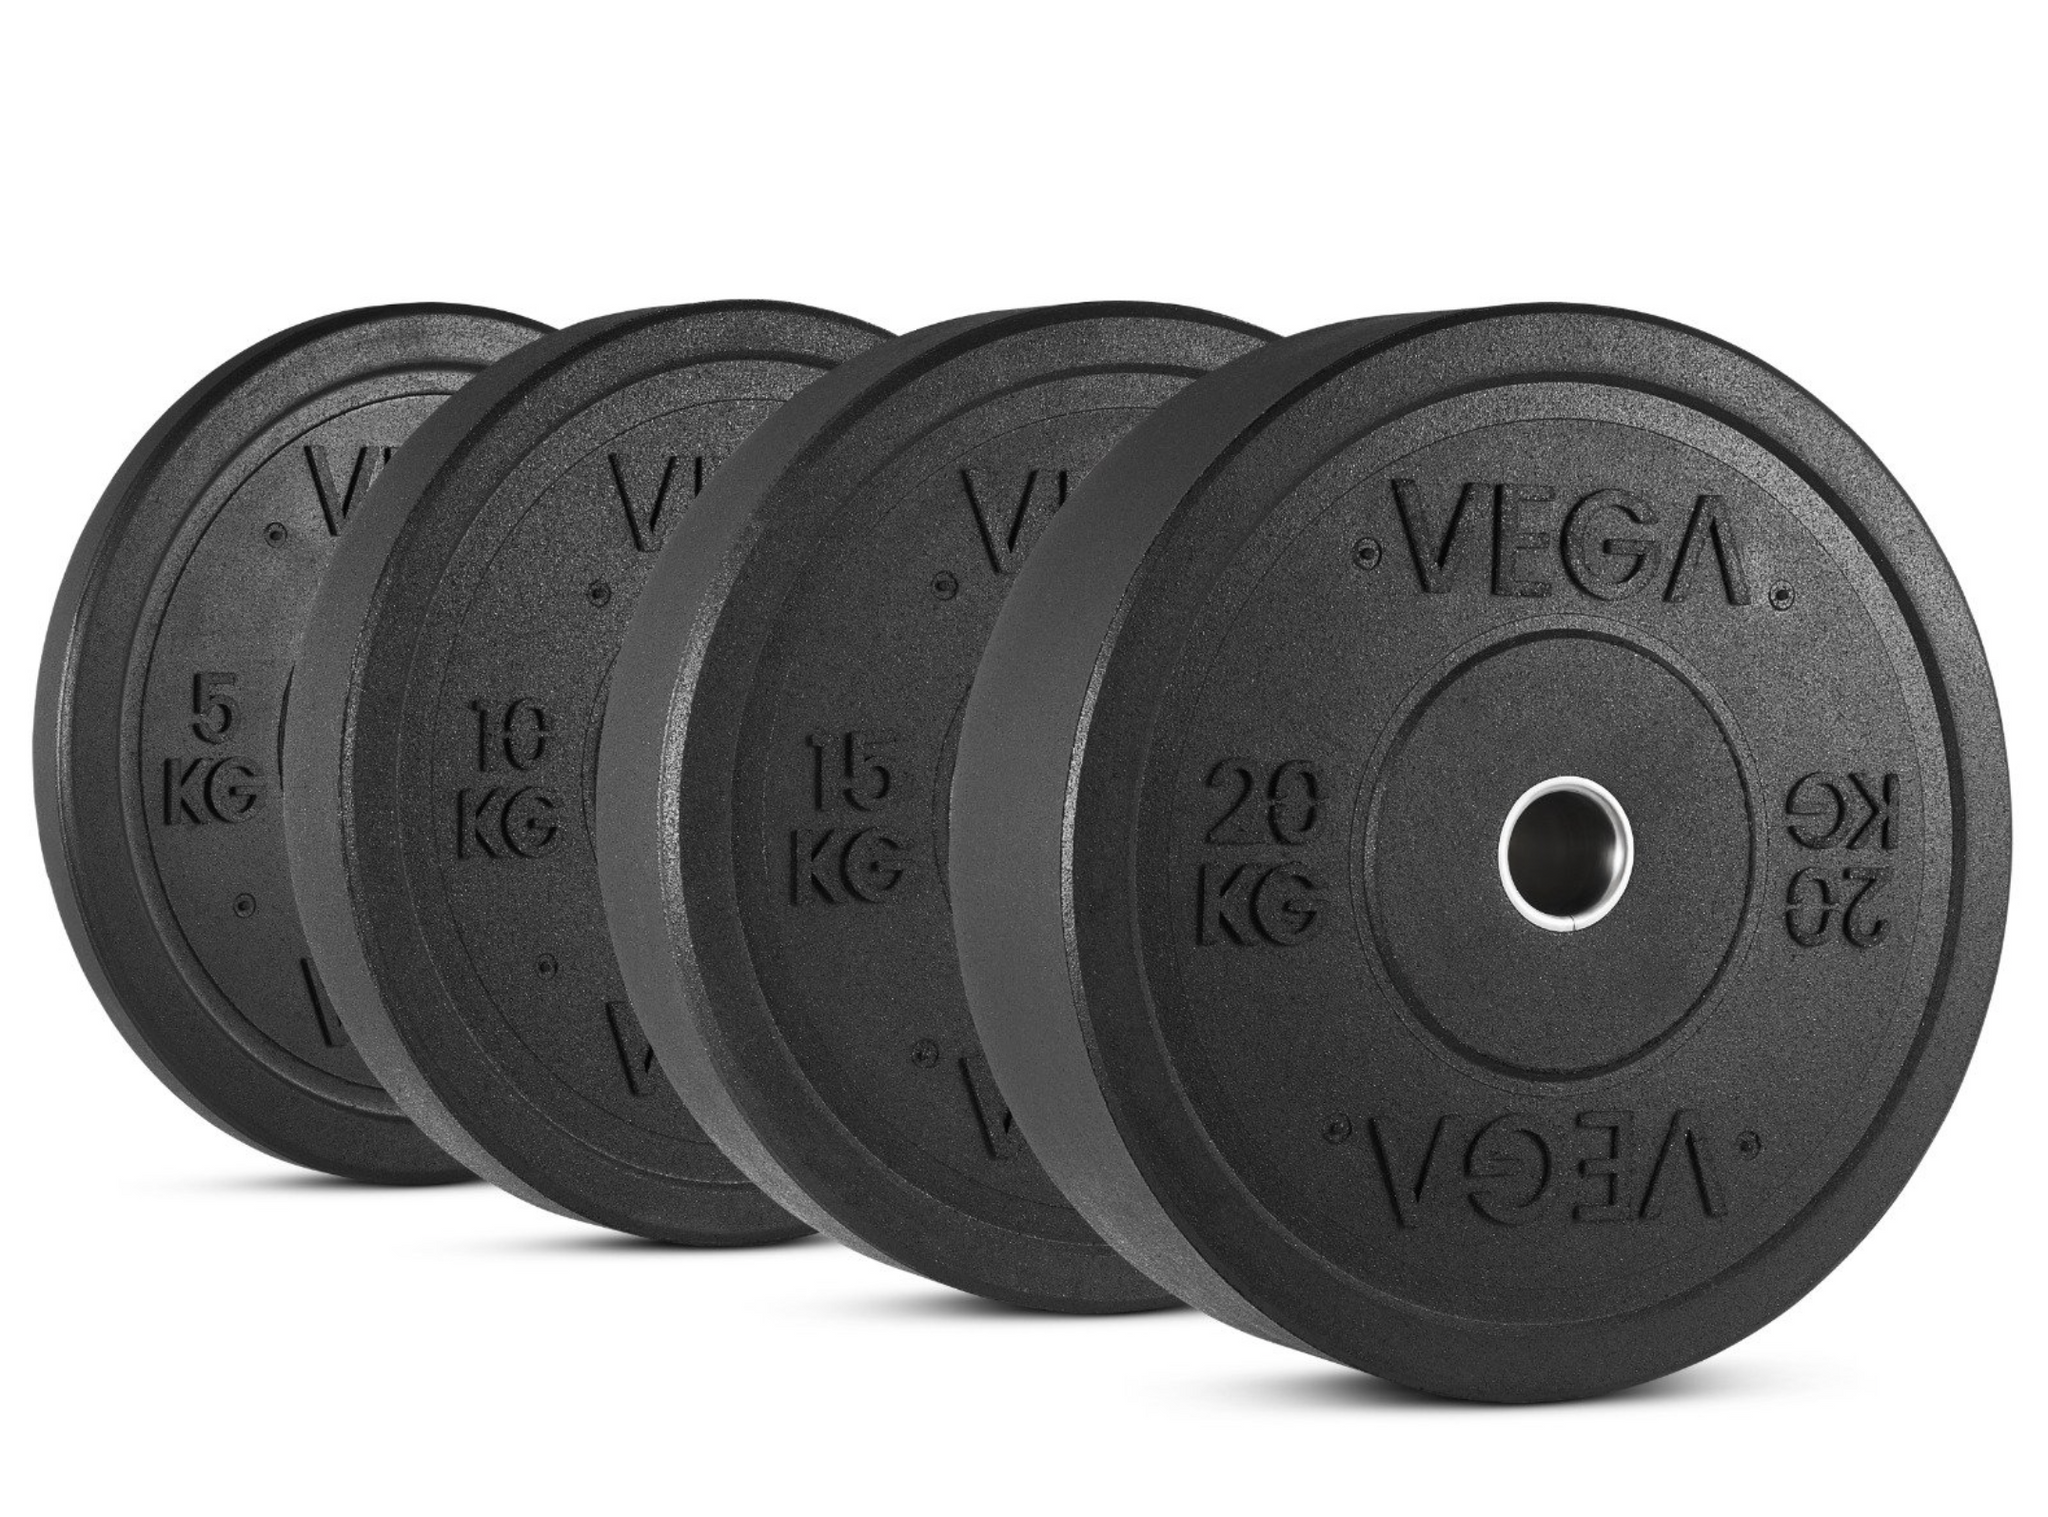 VEGA Fitness ECO Rubber Crumb Olympic Bumper Plates - 200kg Set